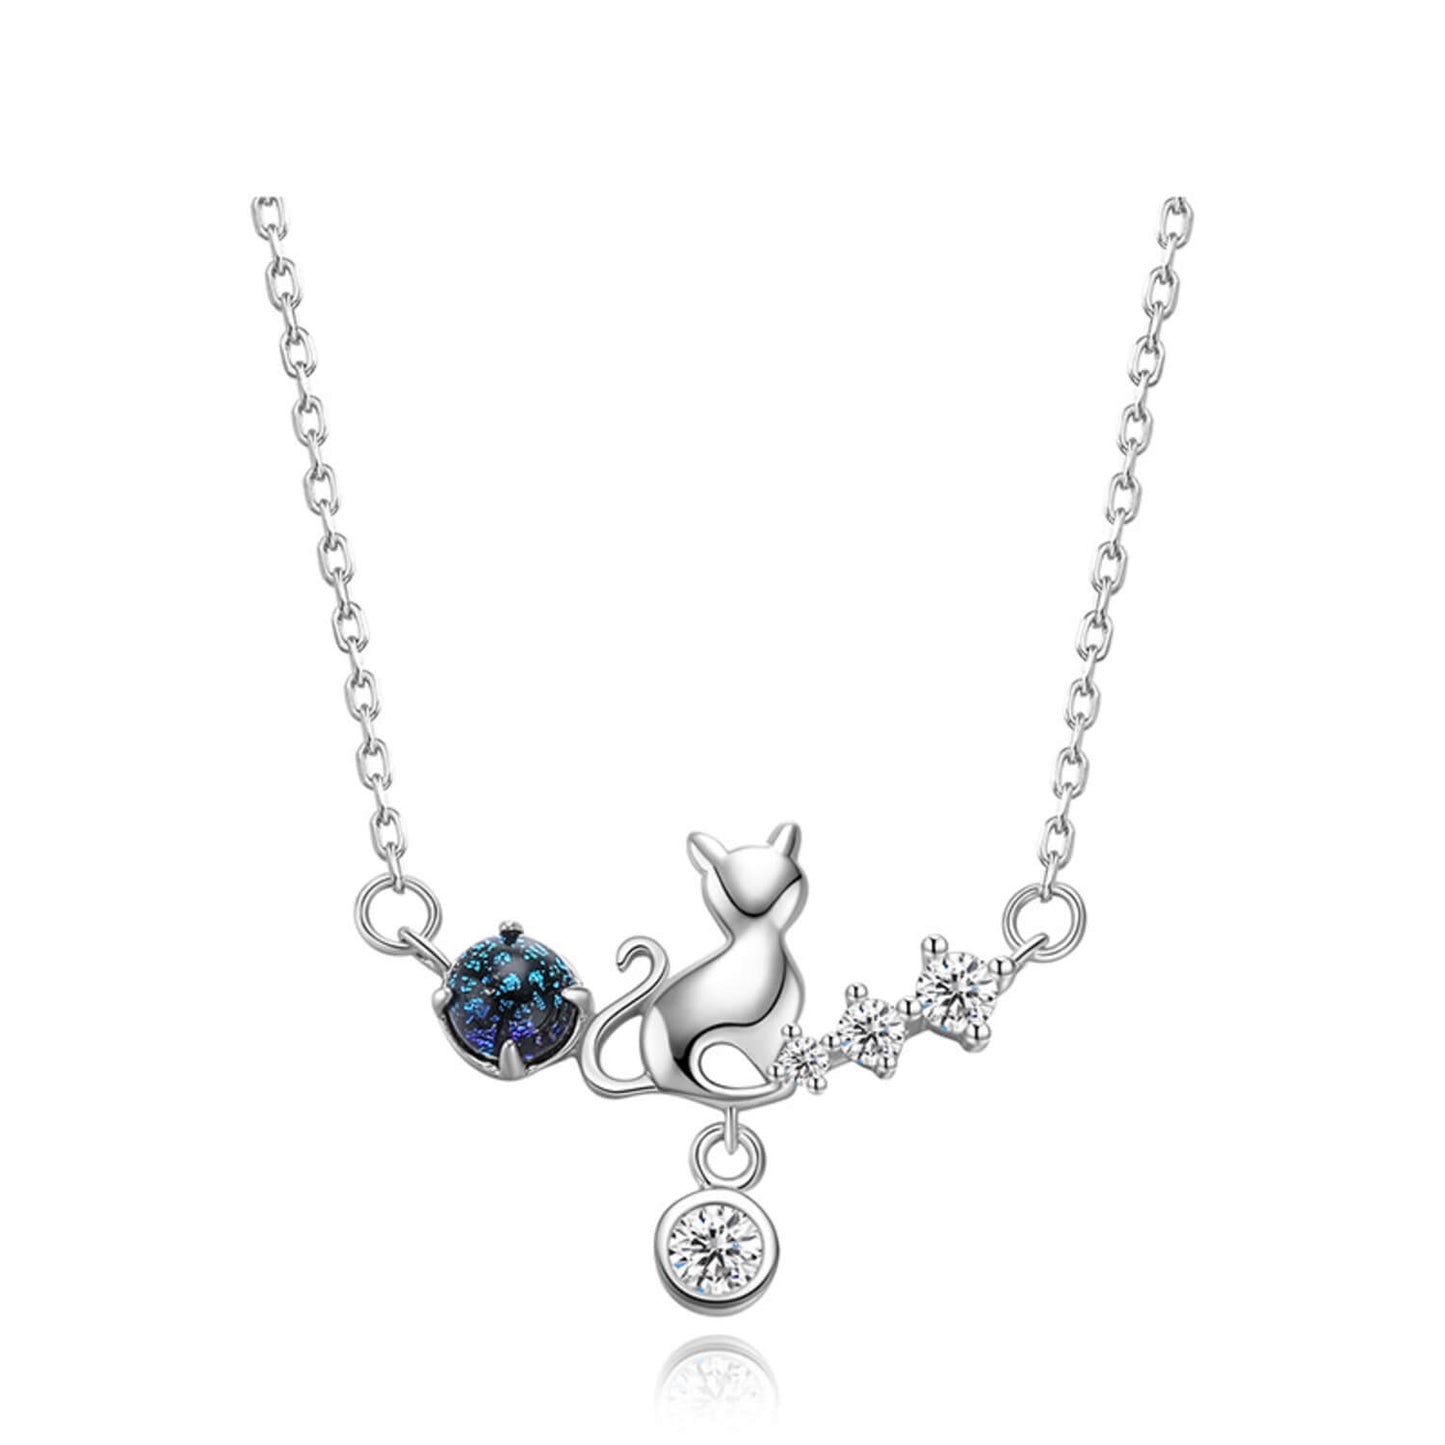 starcat necklace amazon